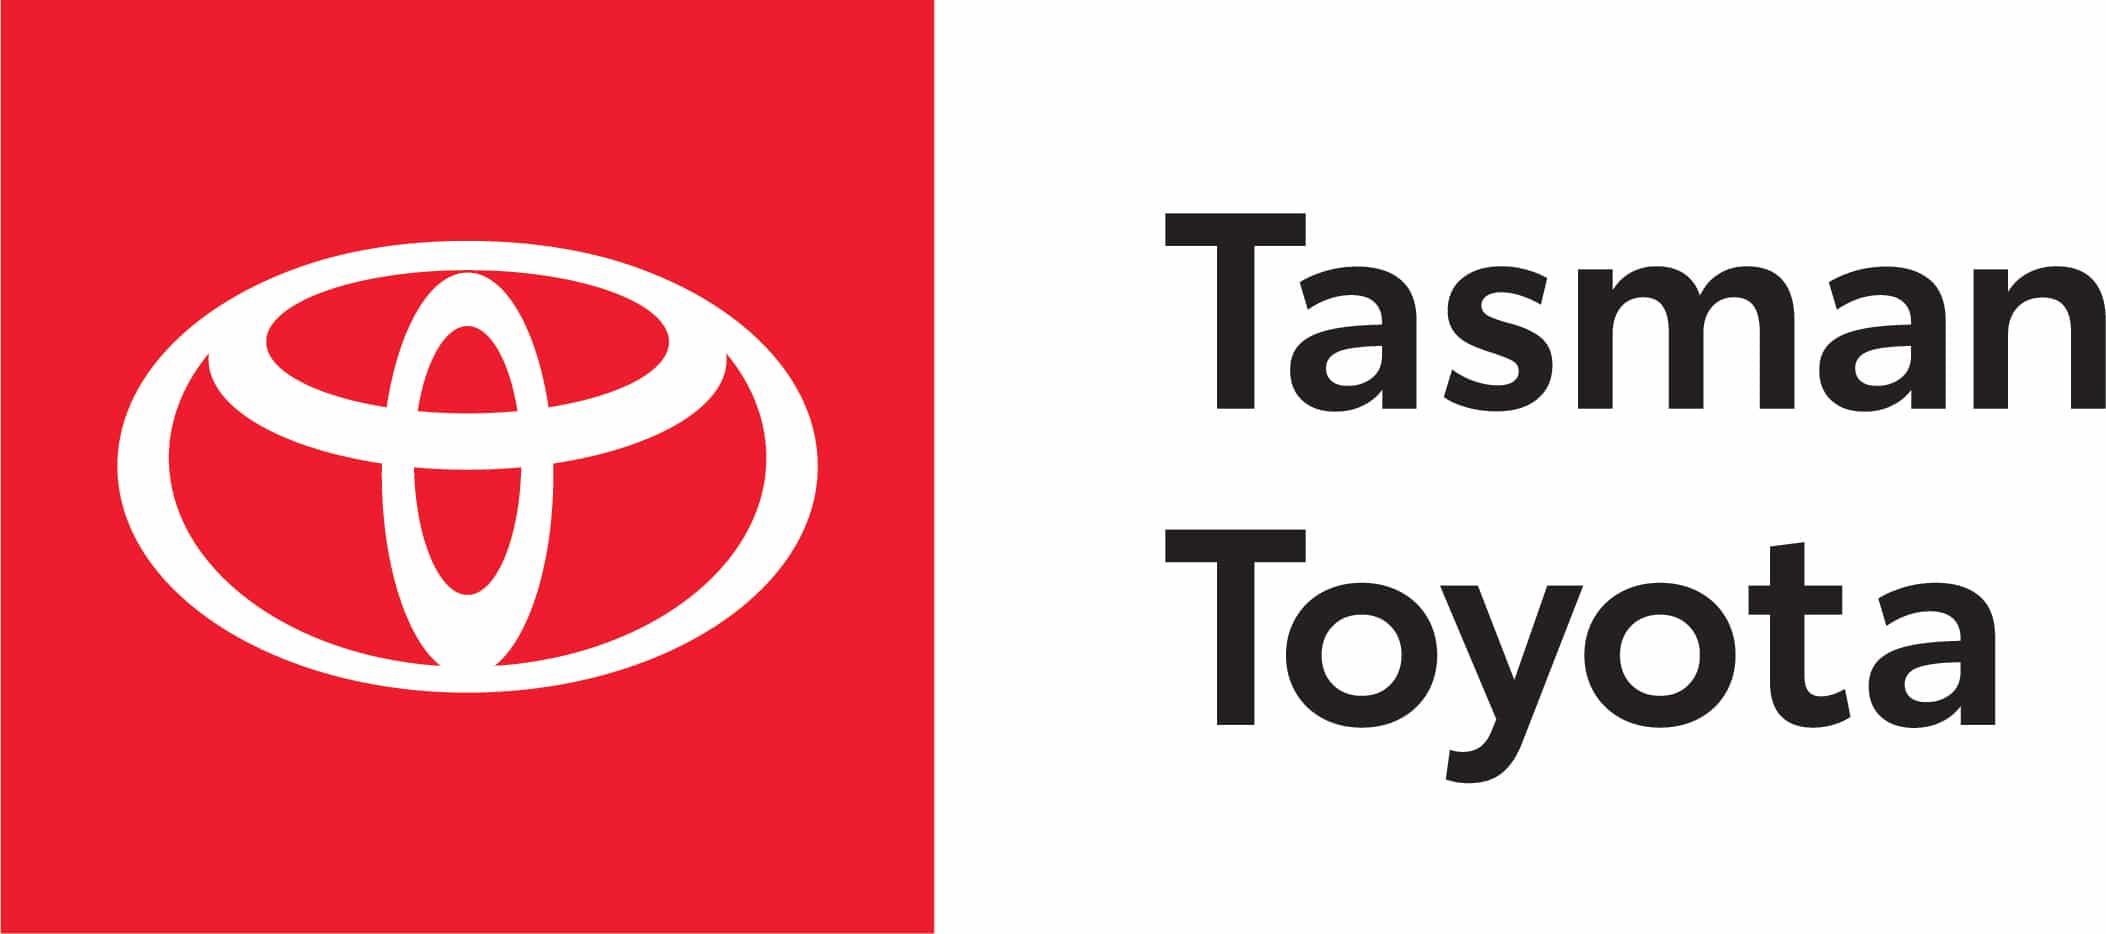 Tasman Toyota Horizontal - CMYK